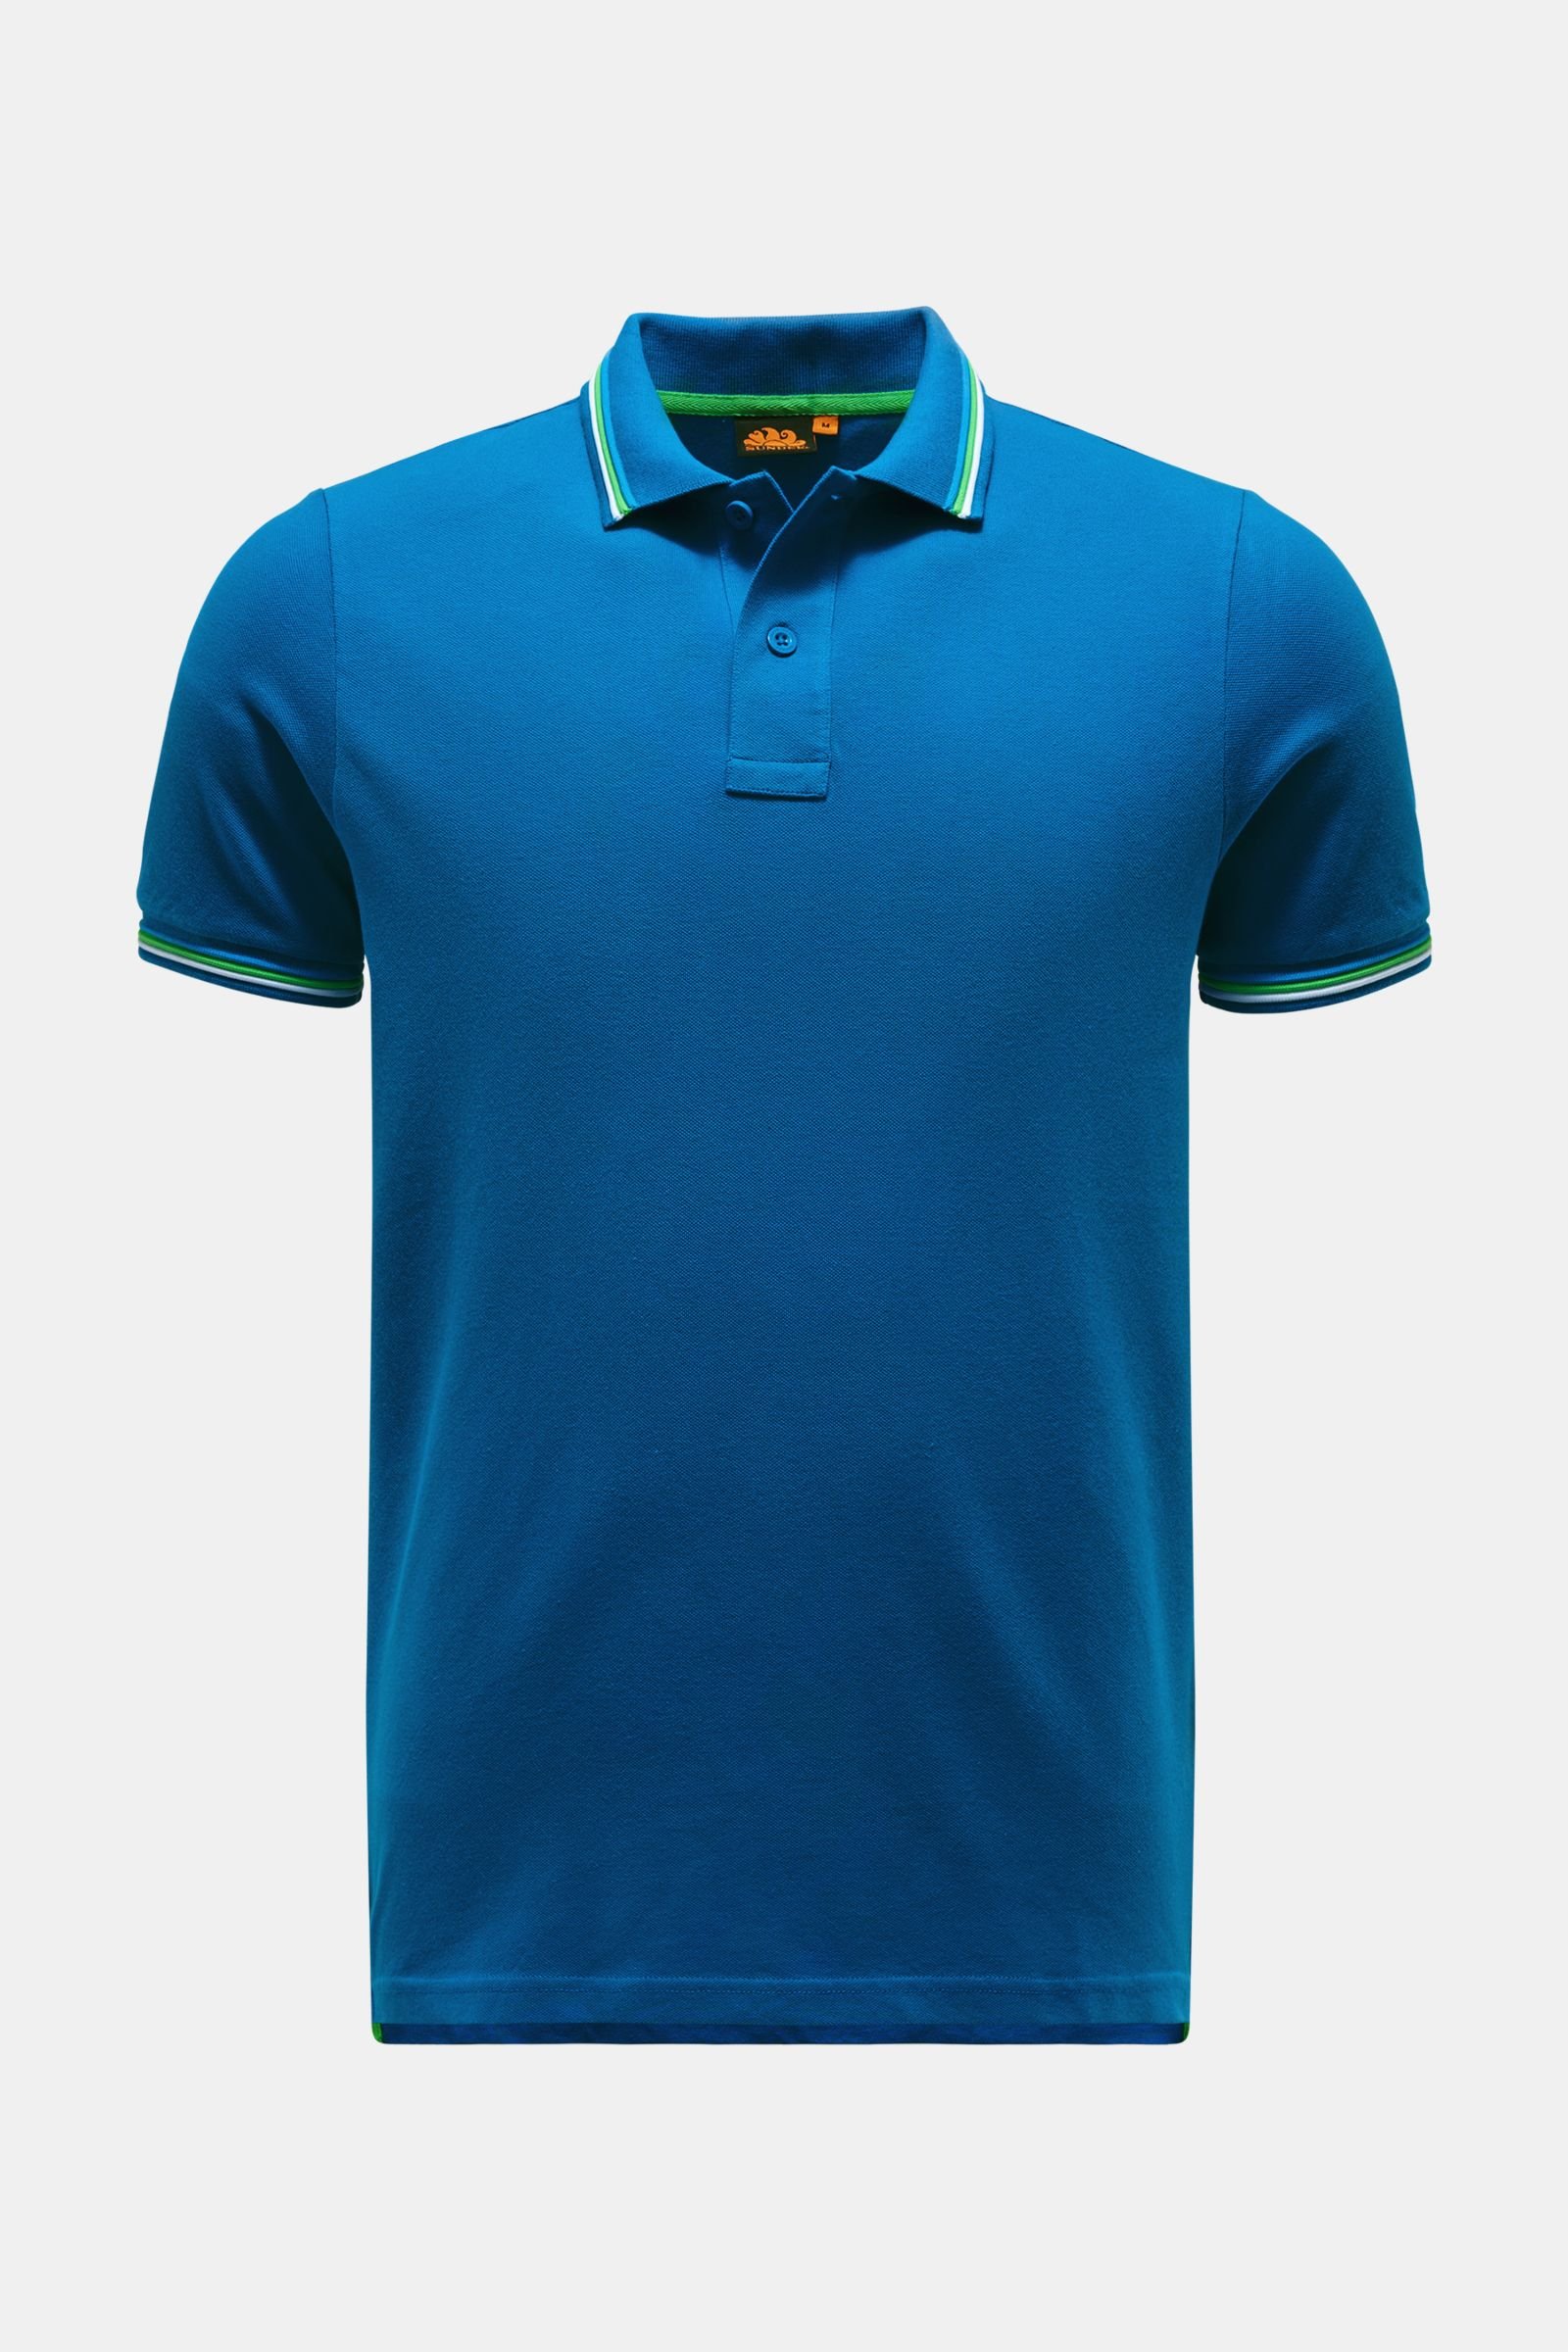 Polo shirt azure